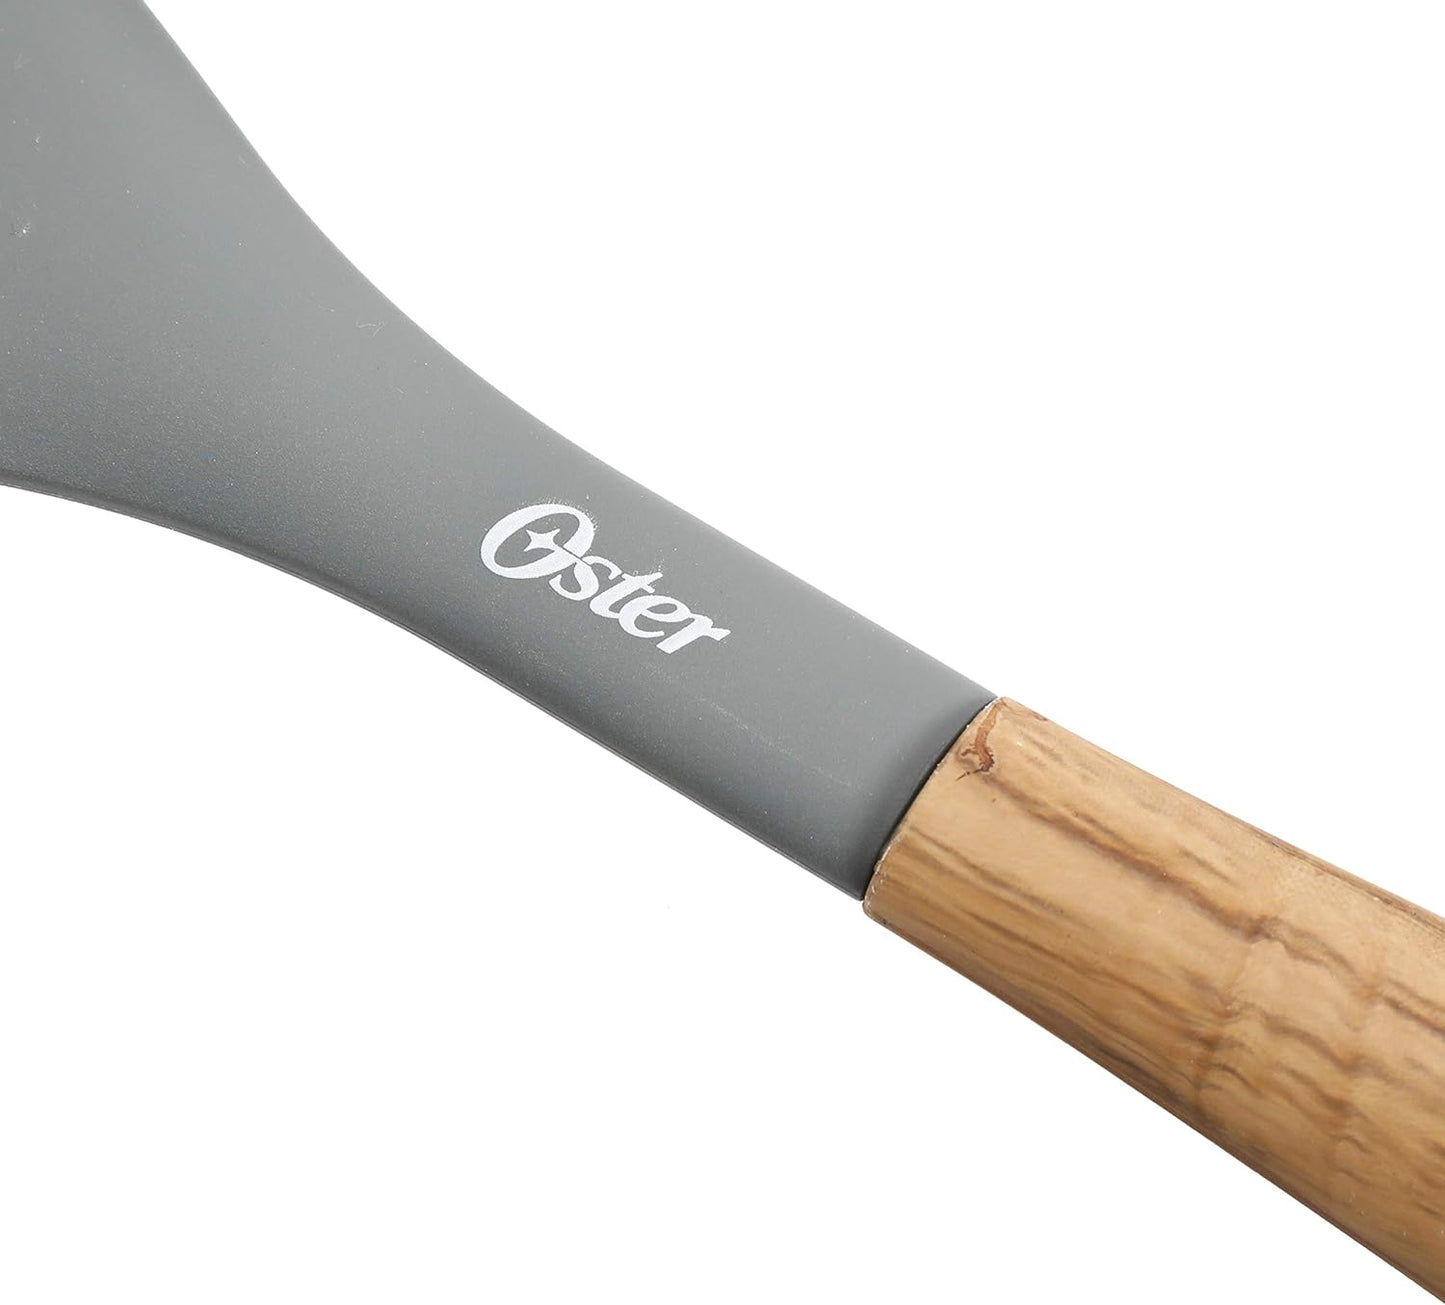 everwood-kitchen-nylon-tools-925101199m-new-wood/gray-4